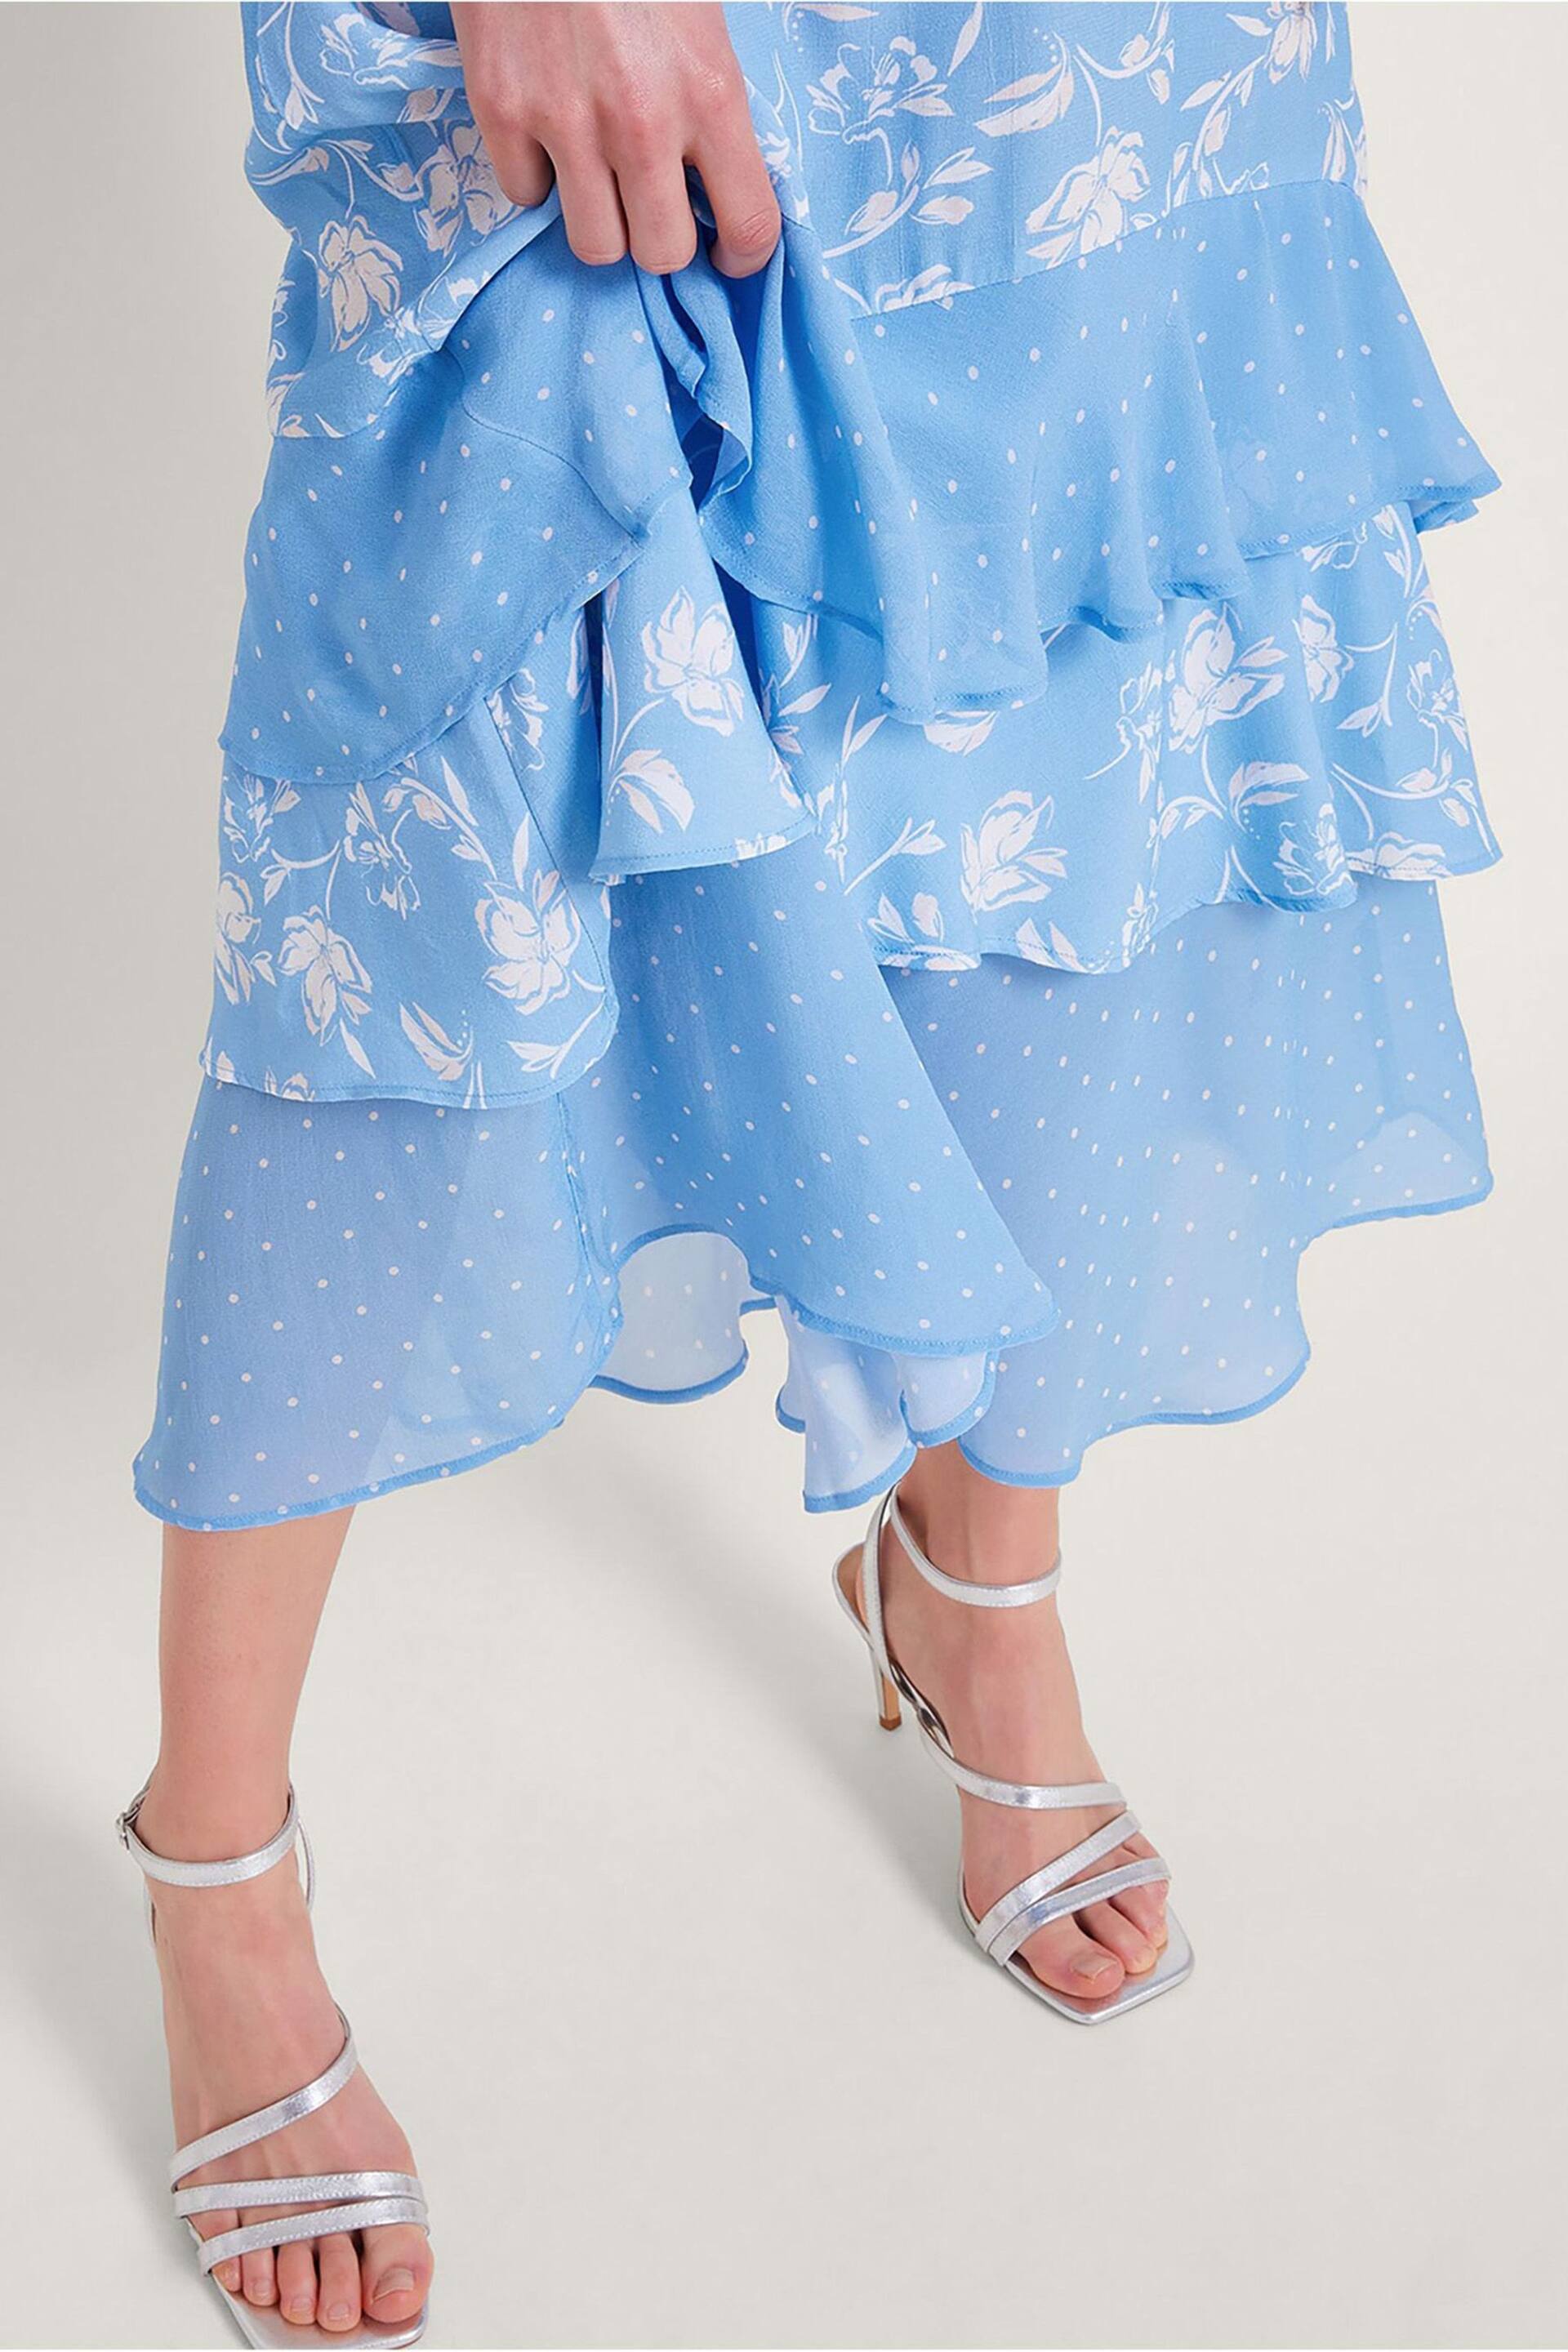 Monsoon Blue Simone Tiered Dress - Image 2 of 5